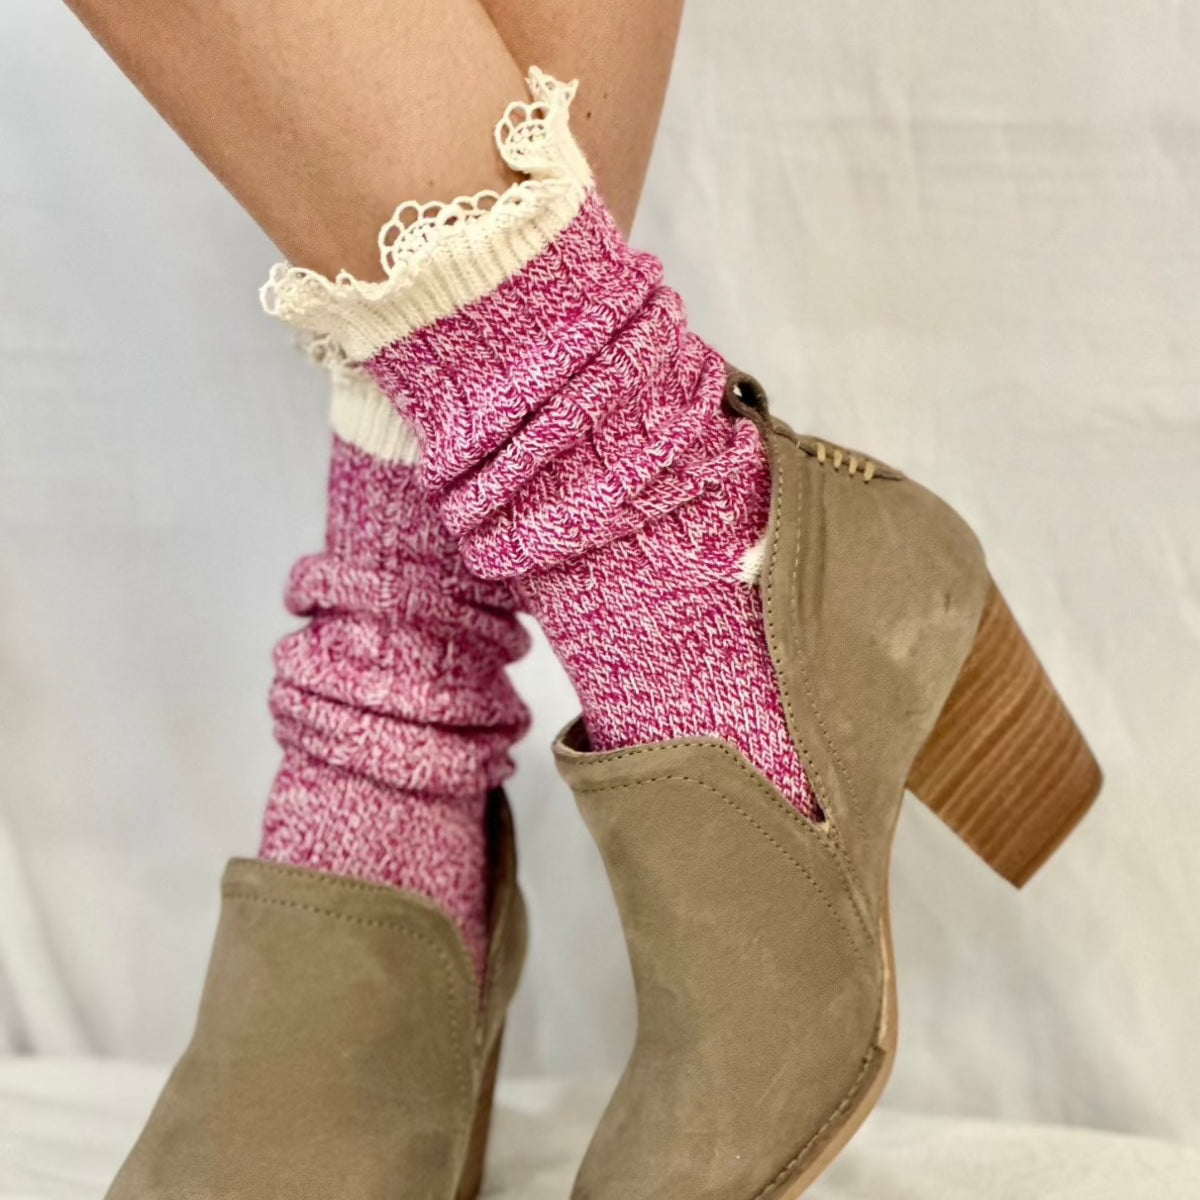 Eco friendly 100% organic pink socks women's,, best quality cotton socks Made in USA.